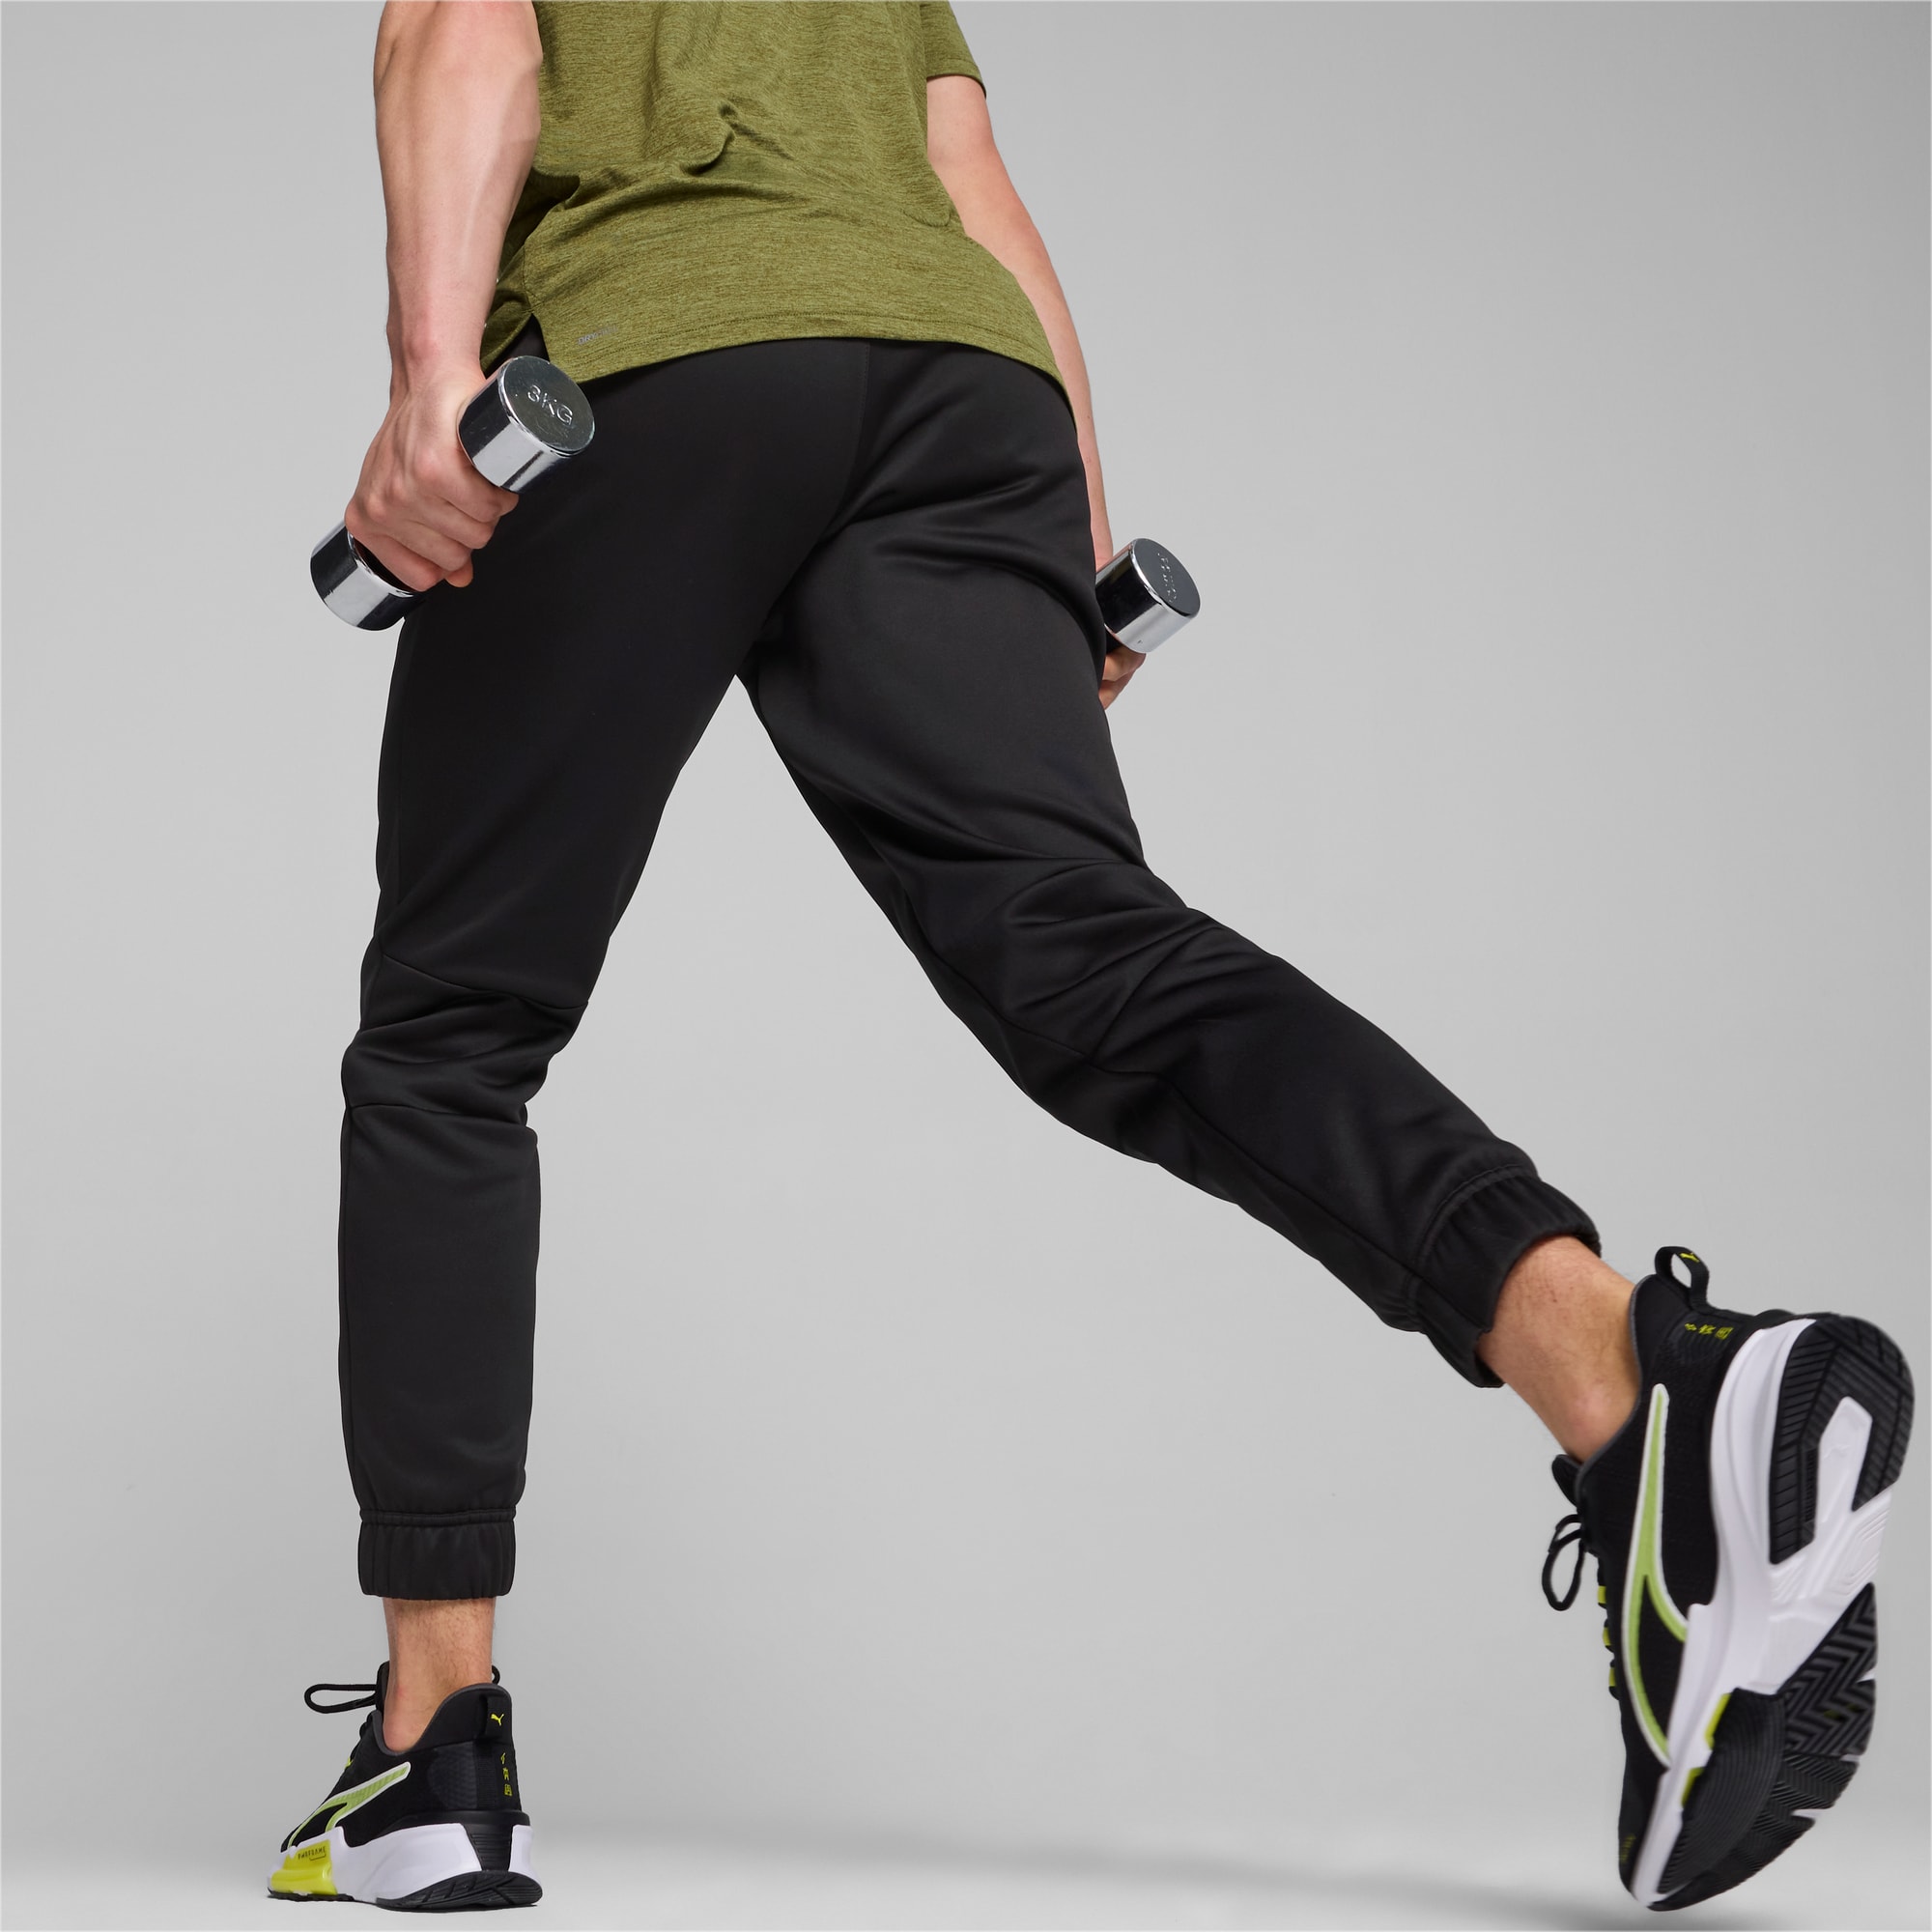 PUMA Pwrfleece Men's Training Joggers, Black/White, Size L, Clothing